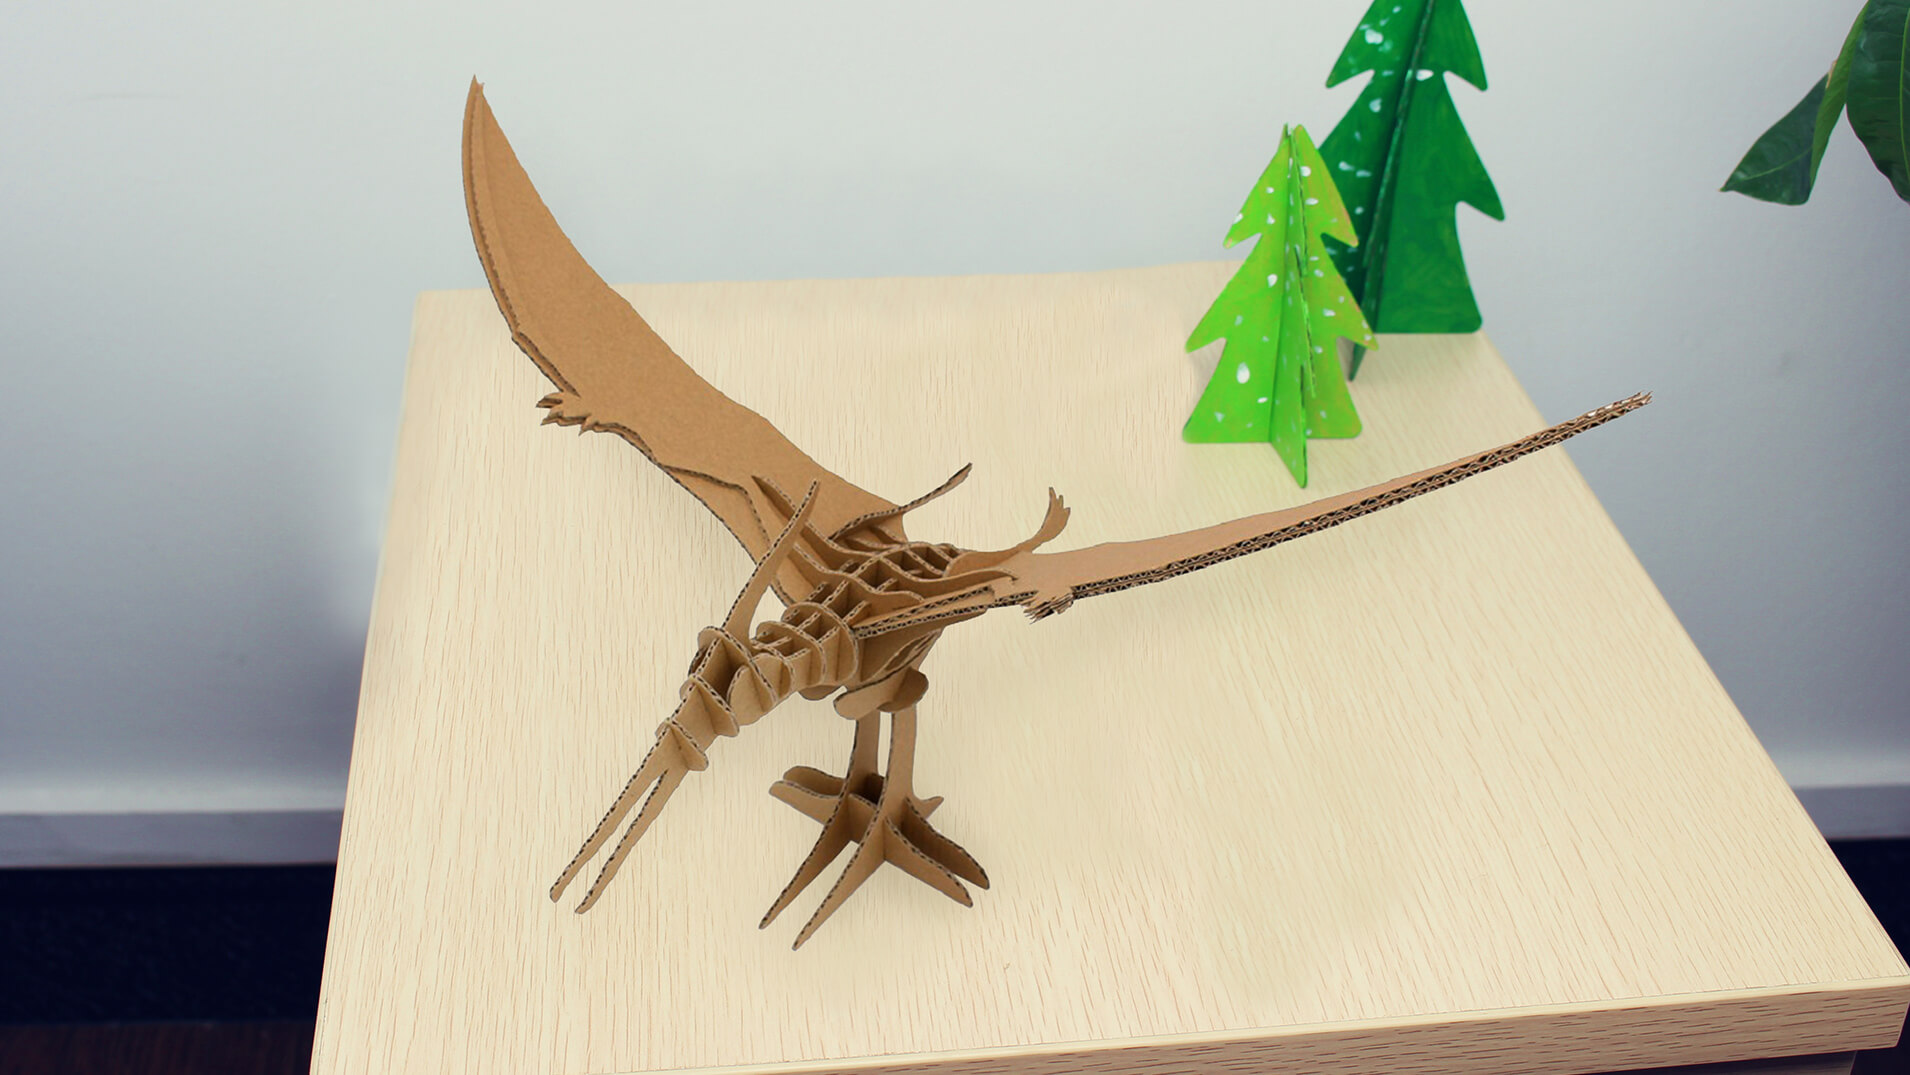 Өй өстәлен бизәү өчен Pterosaur 3D табышмак кәгазе моделе CS172 (1)